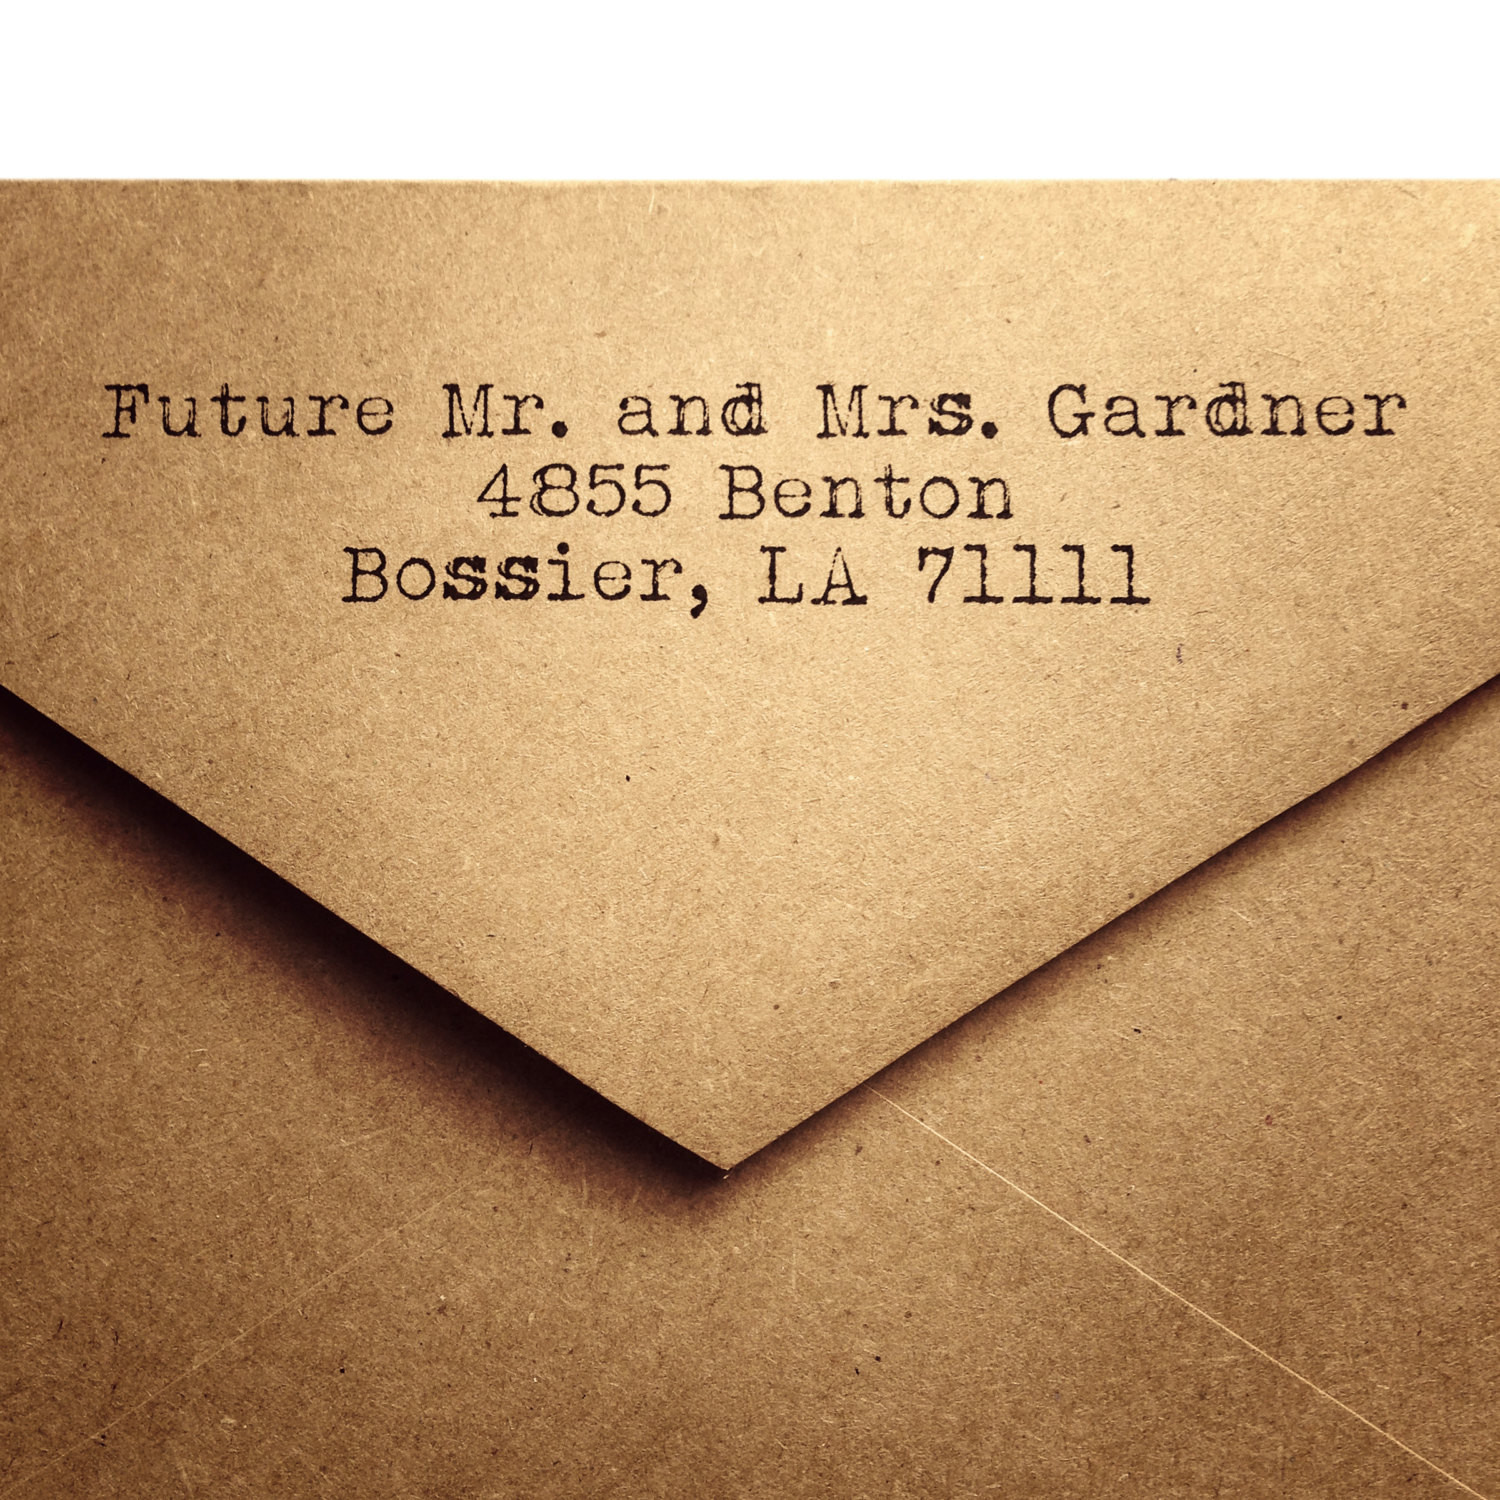 Return Address On Wedding Invitations
 25 Rustic Return Address Envelopes – Wedding return